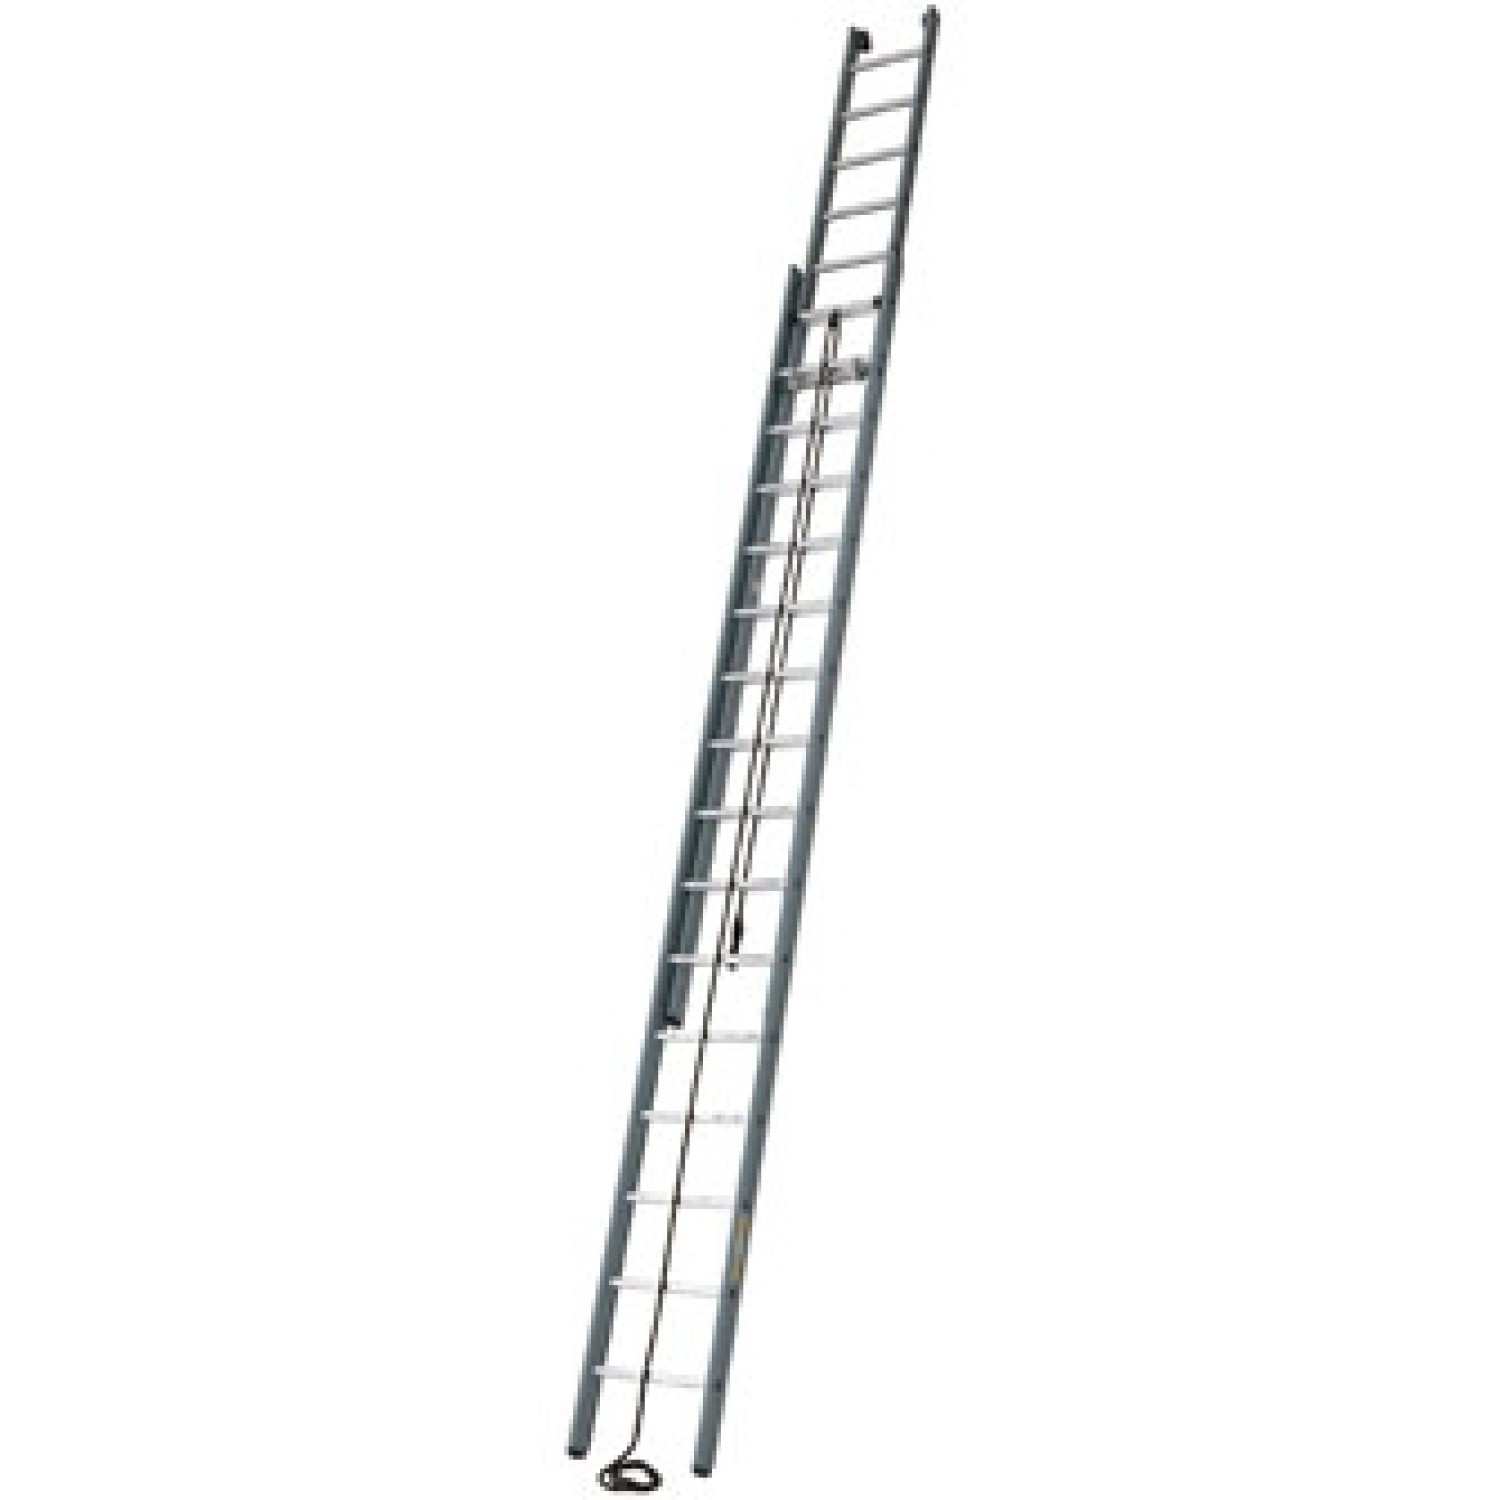 Dirks Optrekladder Assortiment drie delige ladders